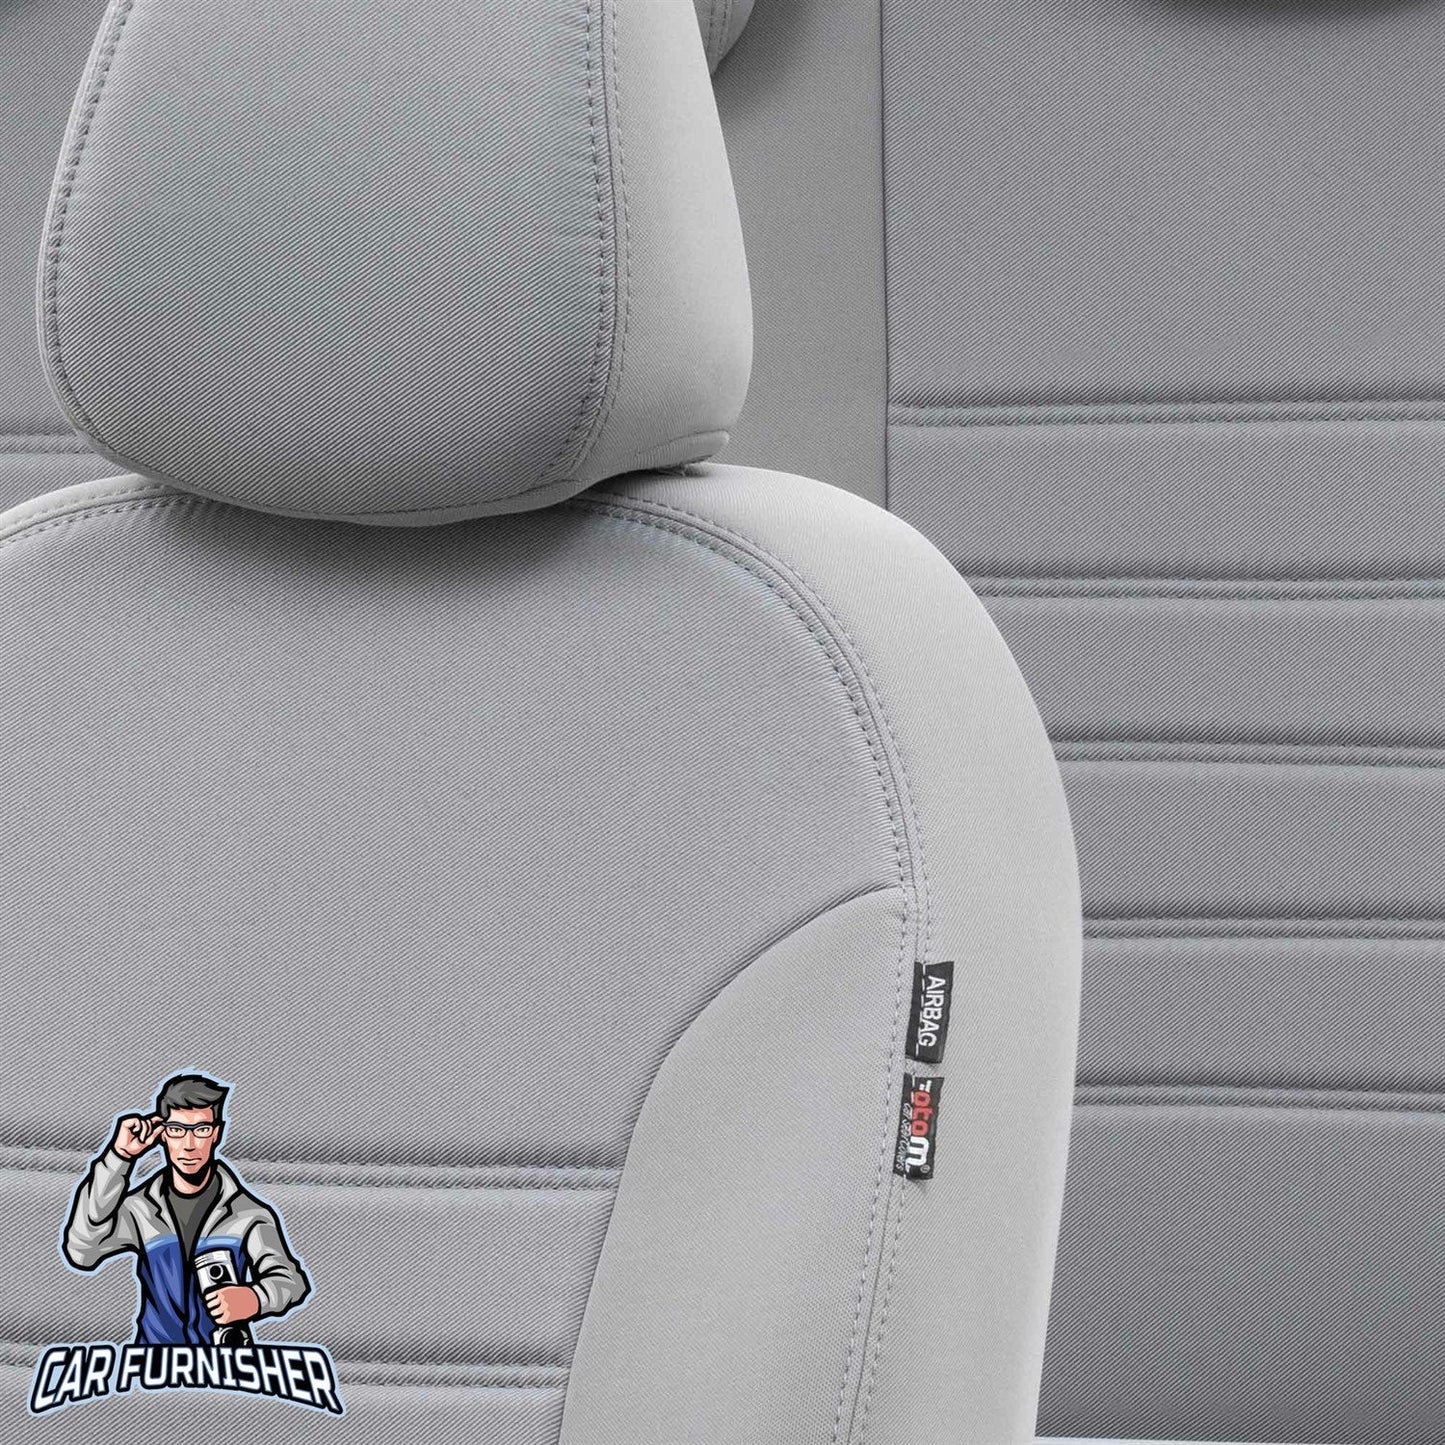 Ford B-Max Seat Covers Original Jacquard Design Light Gray Jacquard Fabric